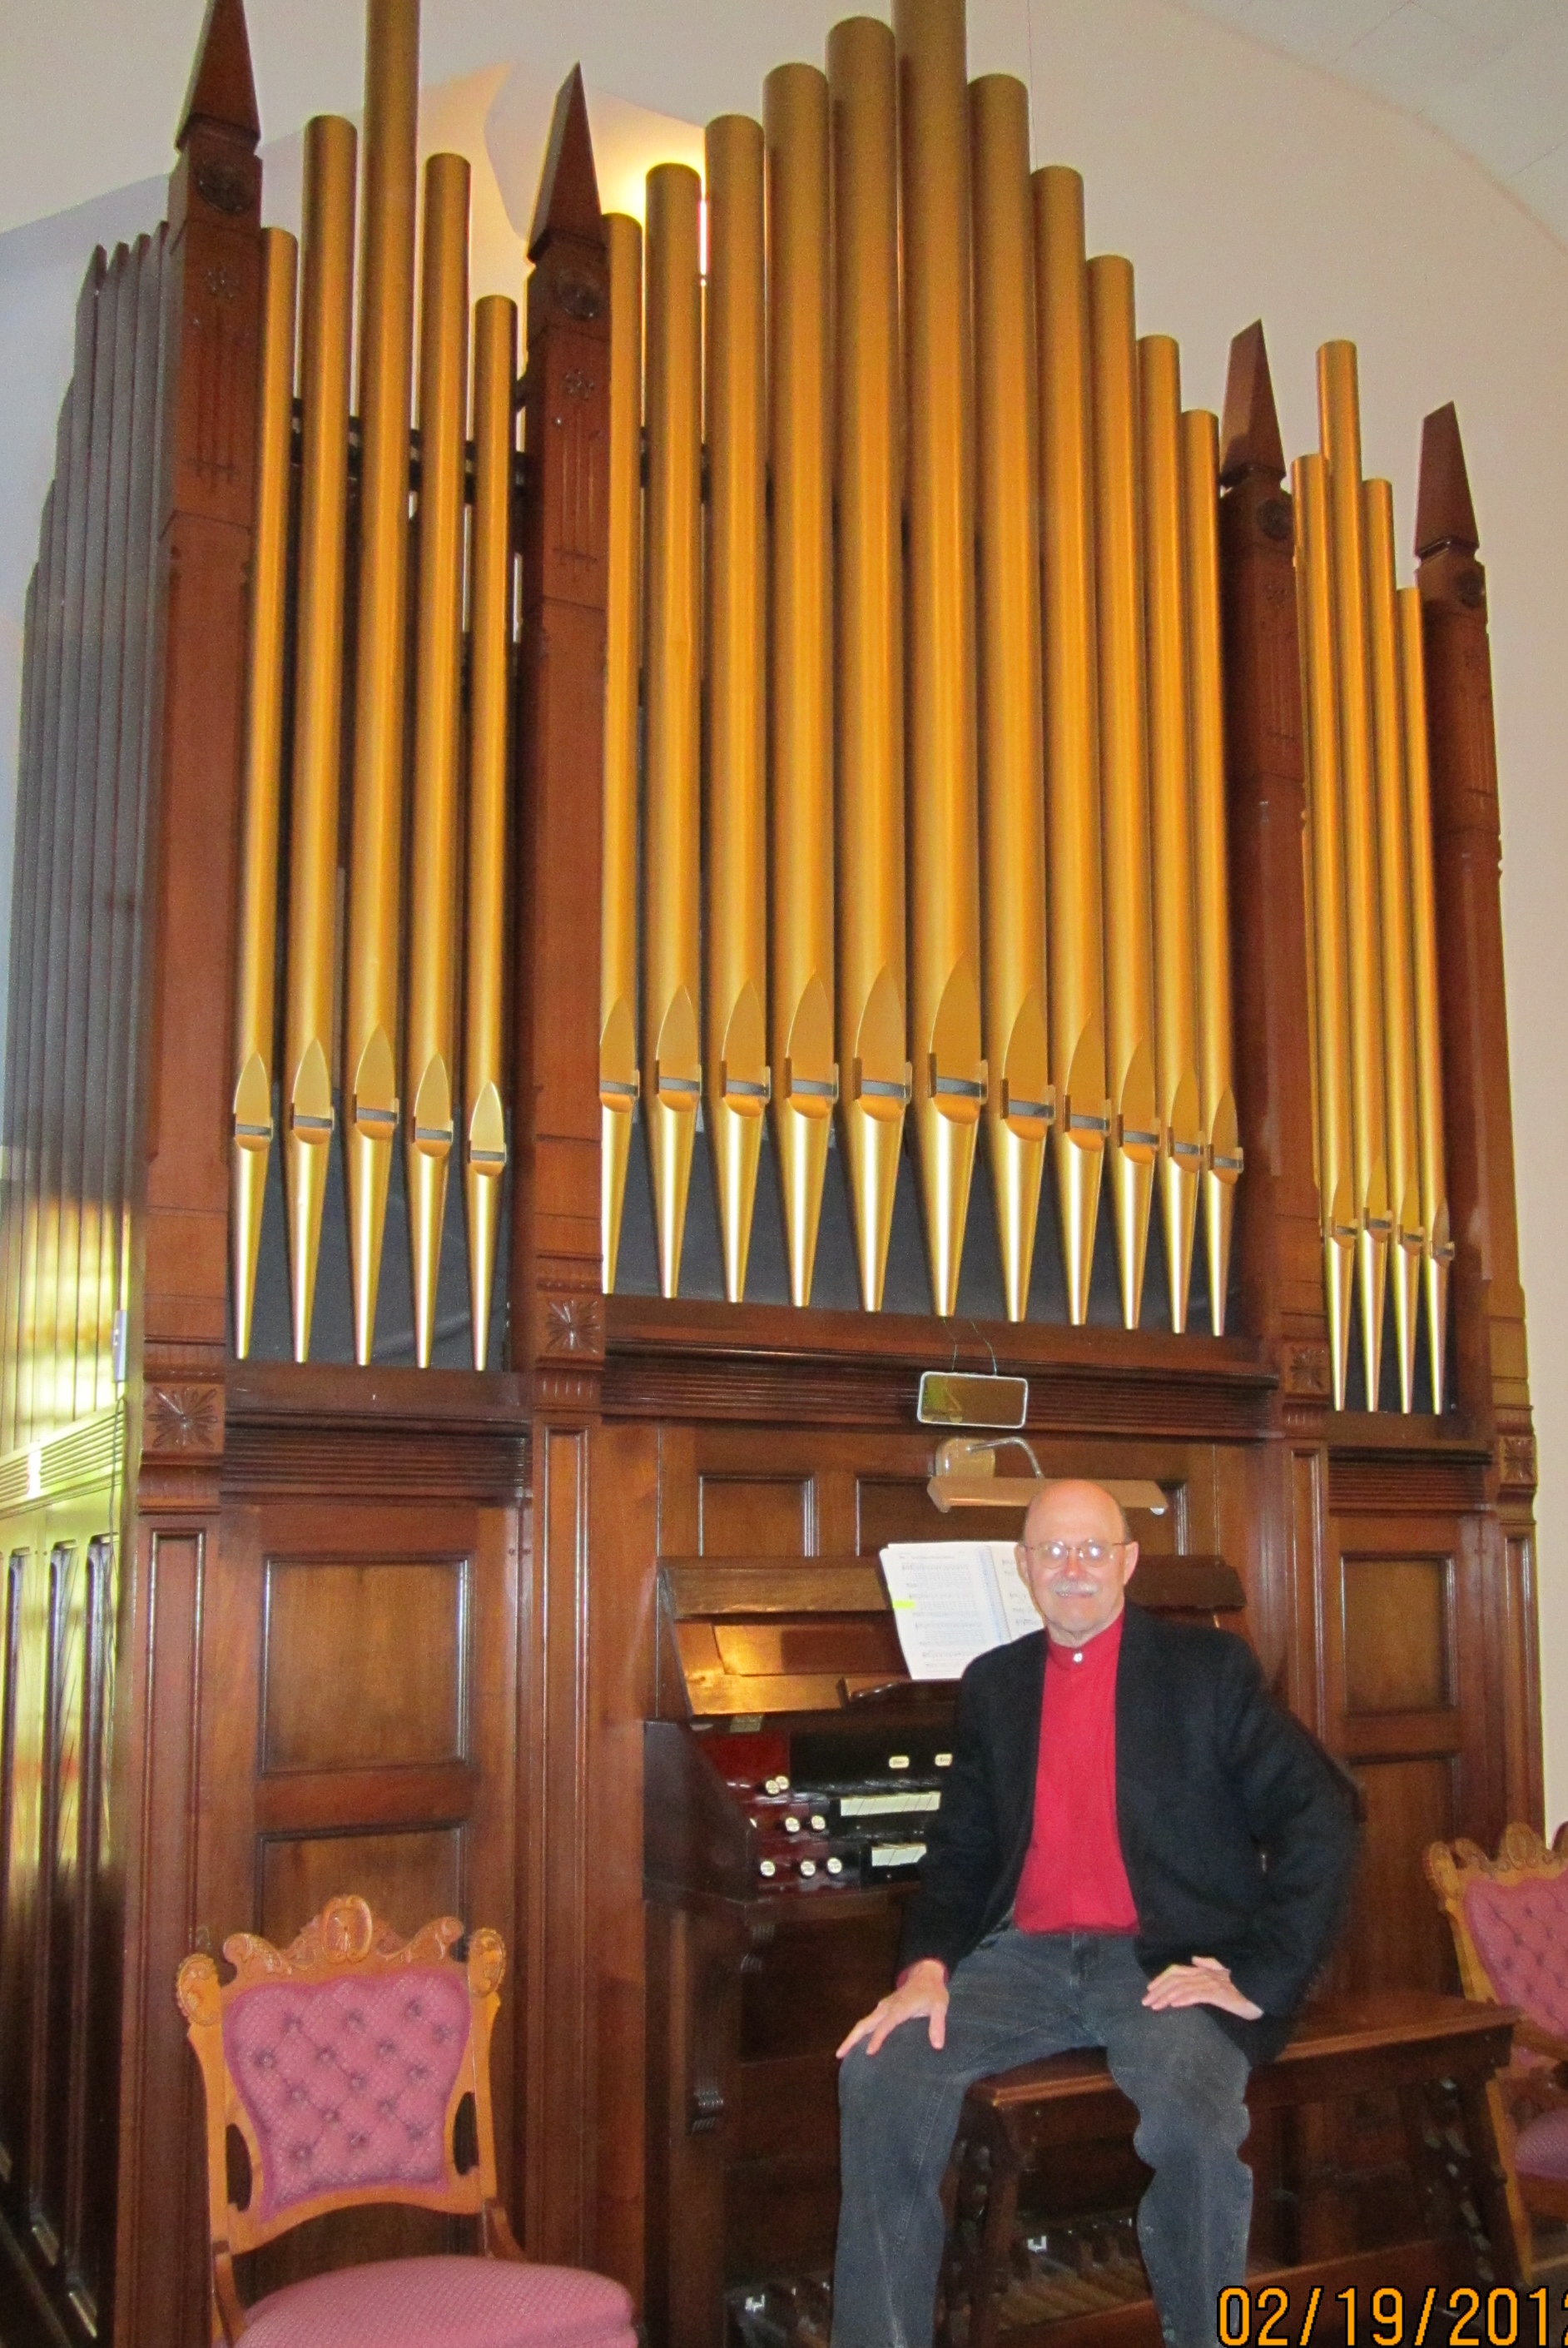 File:Pipe organ at Kirksville Christian Church.jpg - Wikimedia Commons